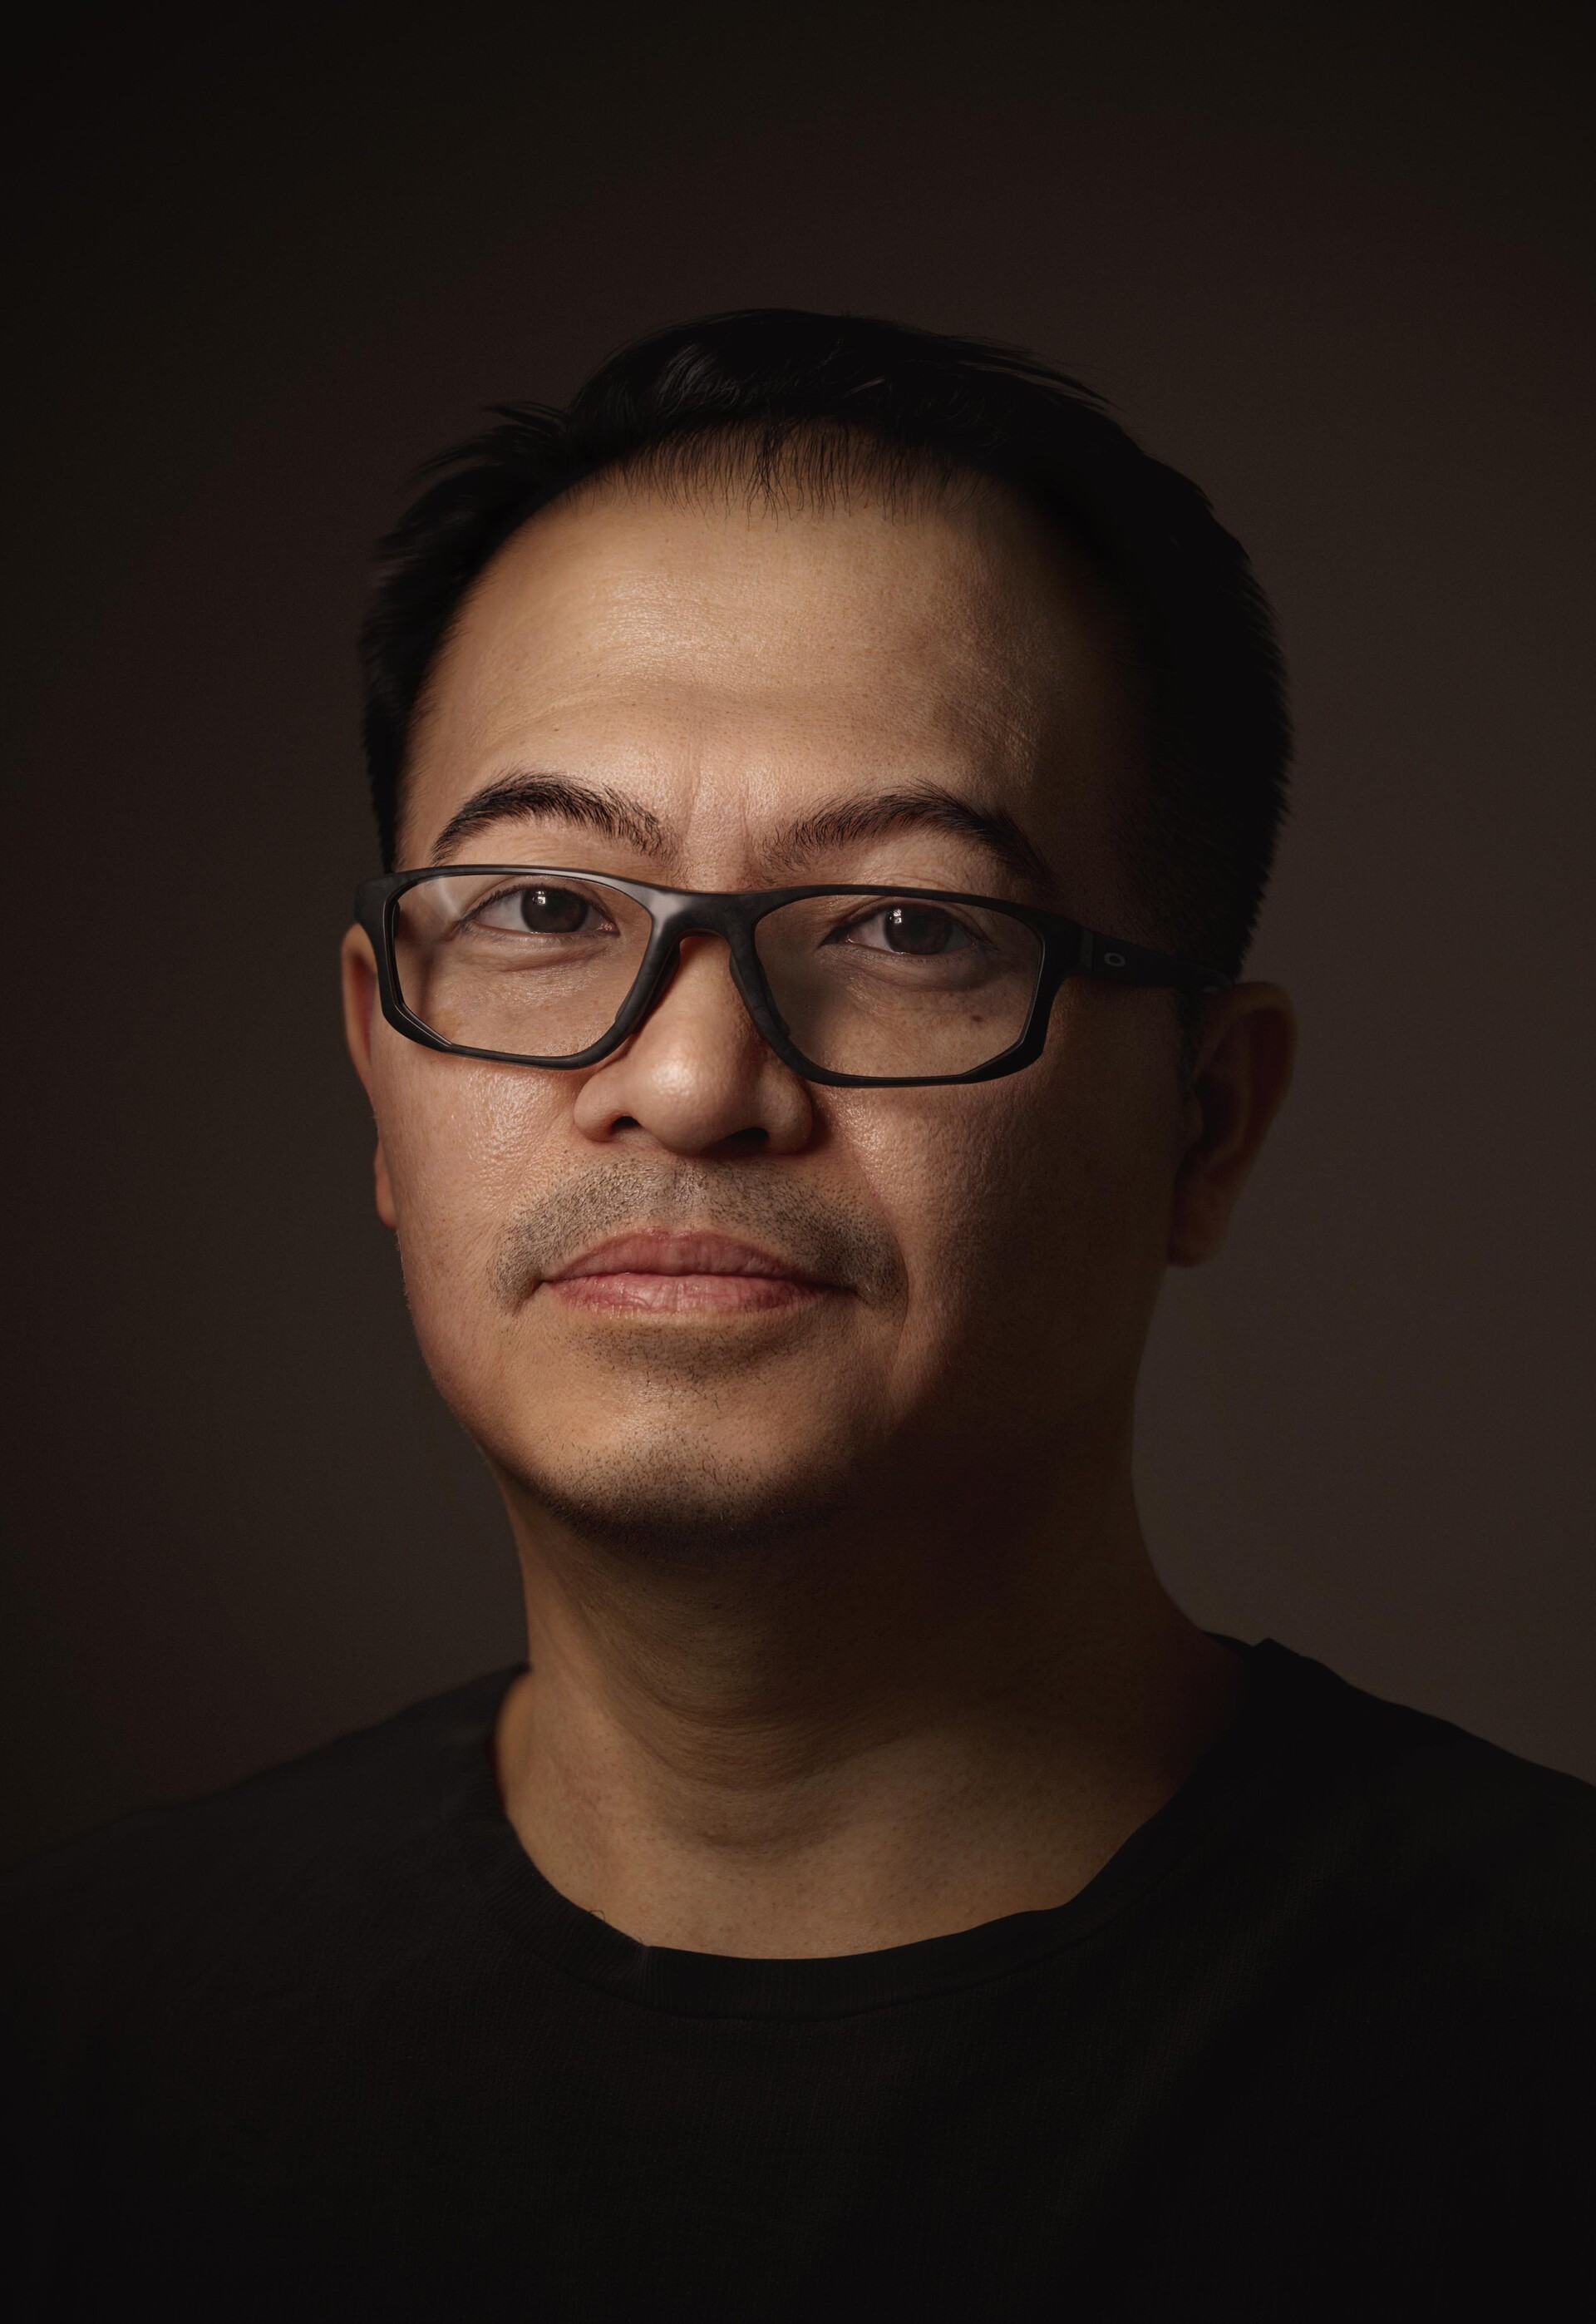 ArtStation - Portrait of Thang Somsak Pairew